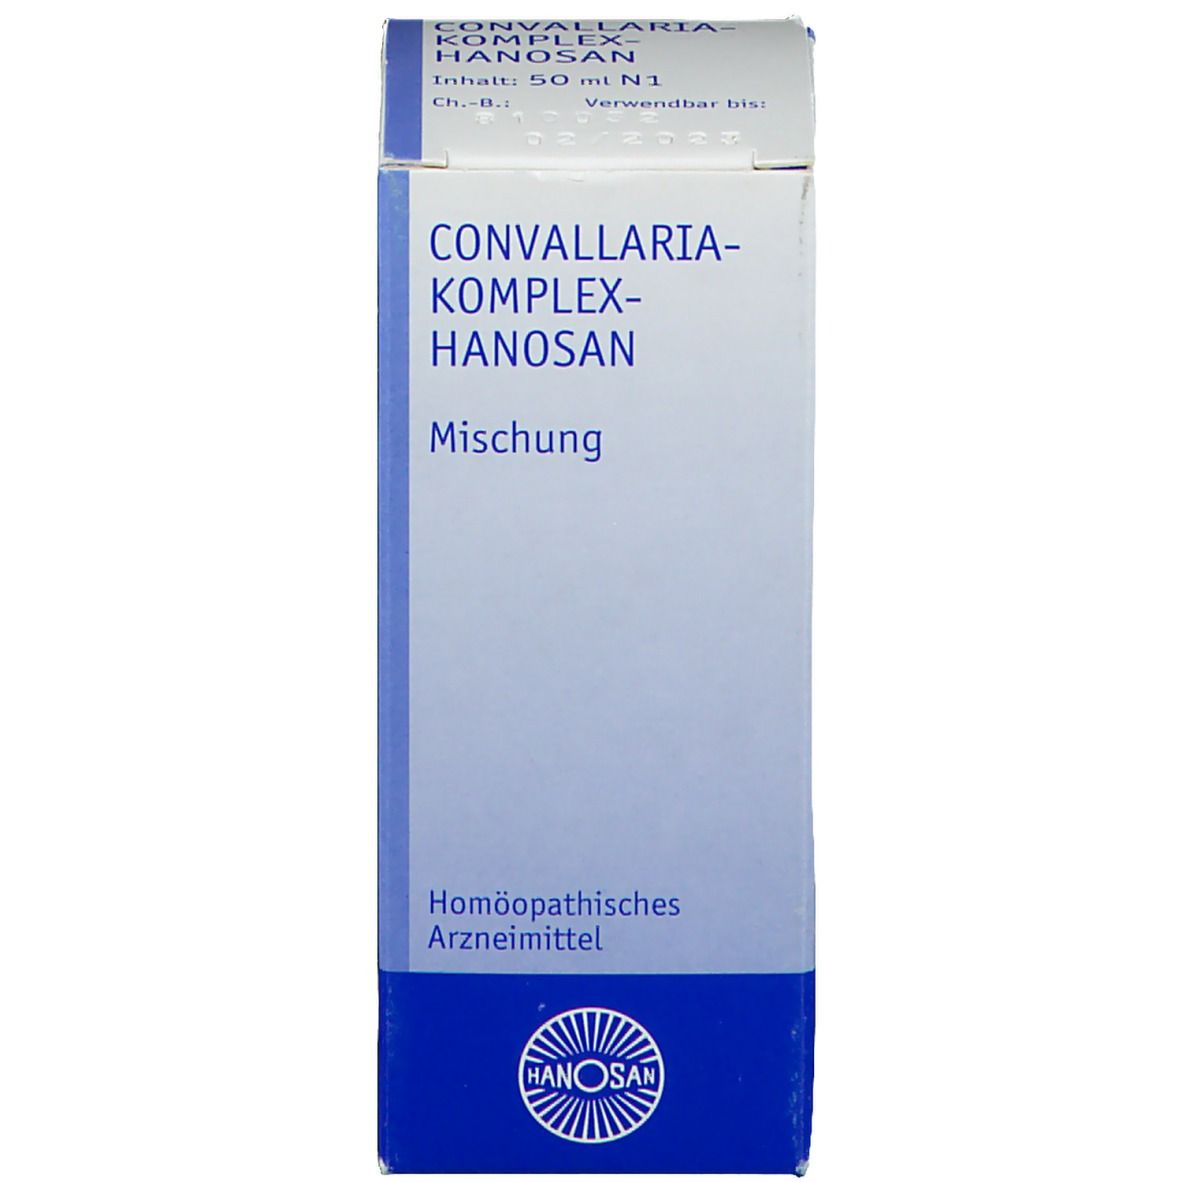 Convallaria-Komplex-Hanosan